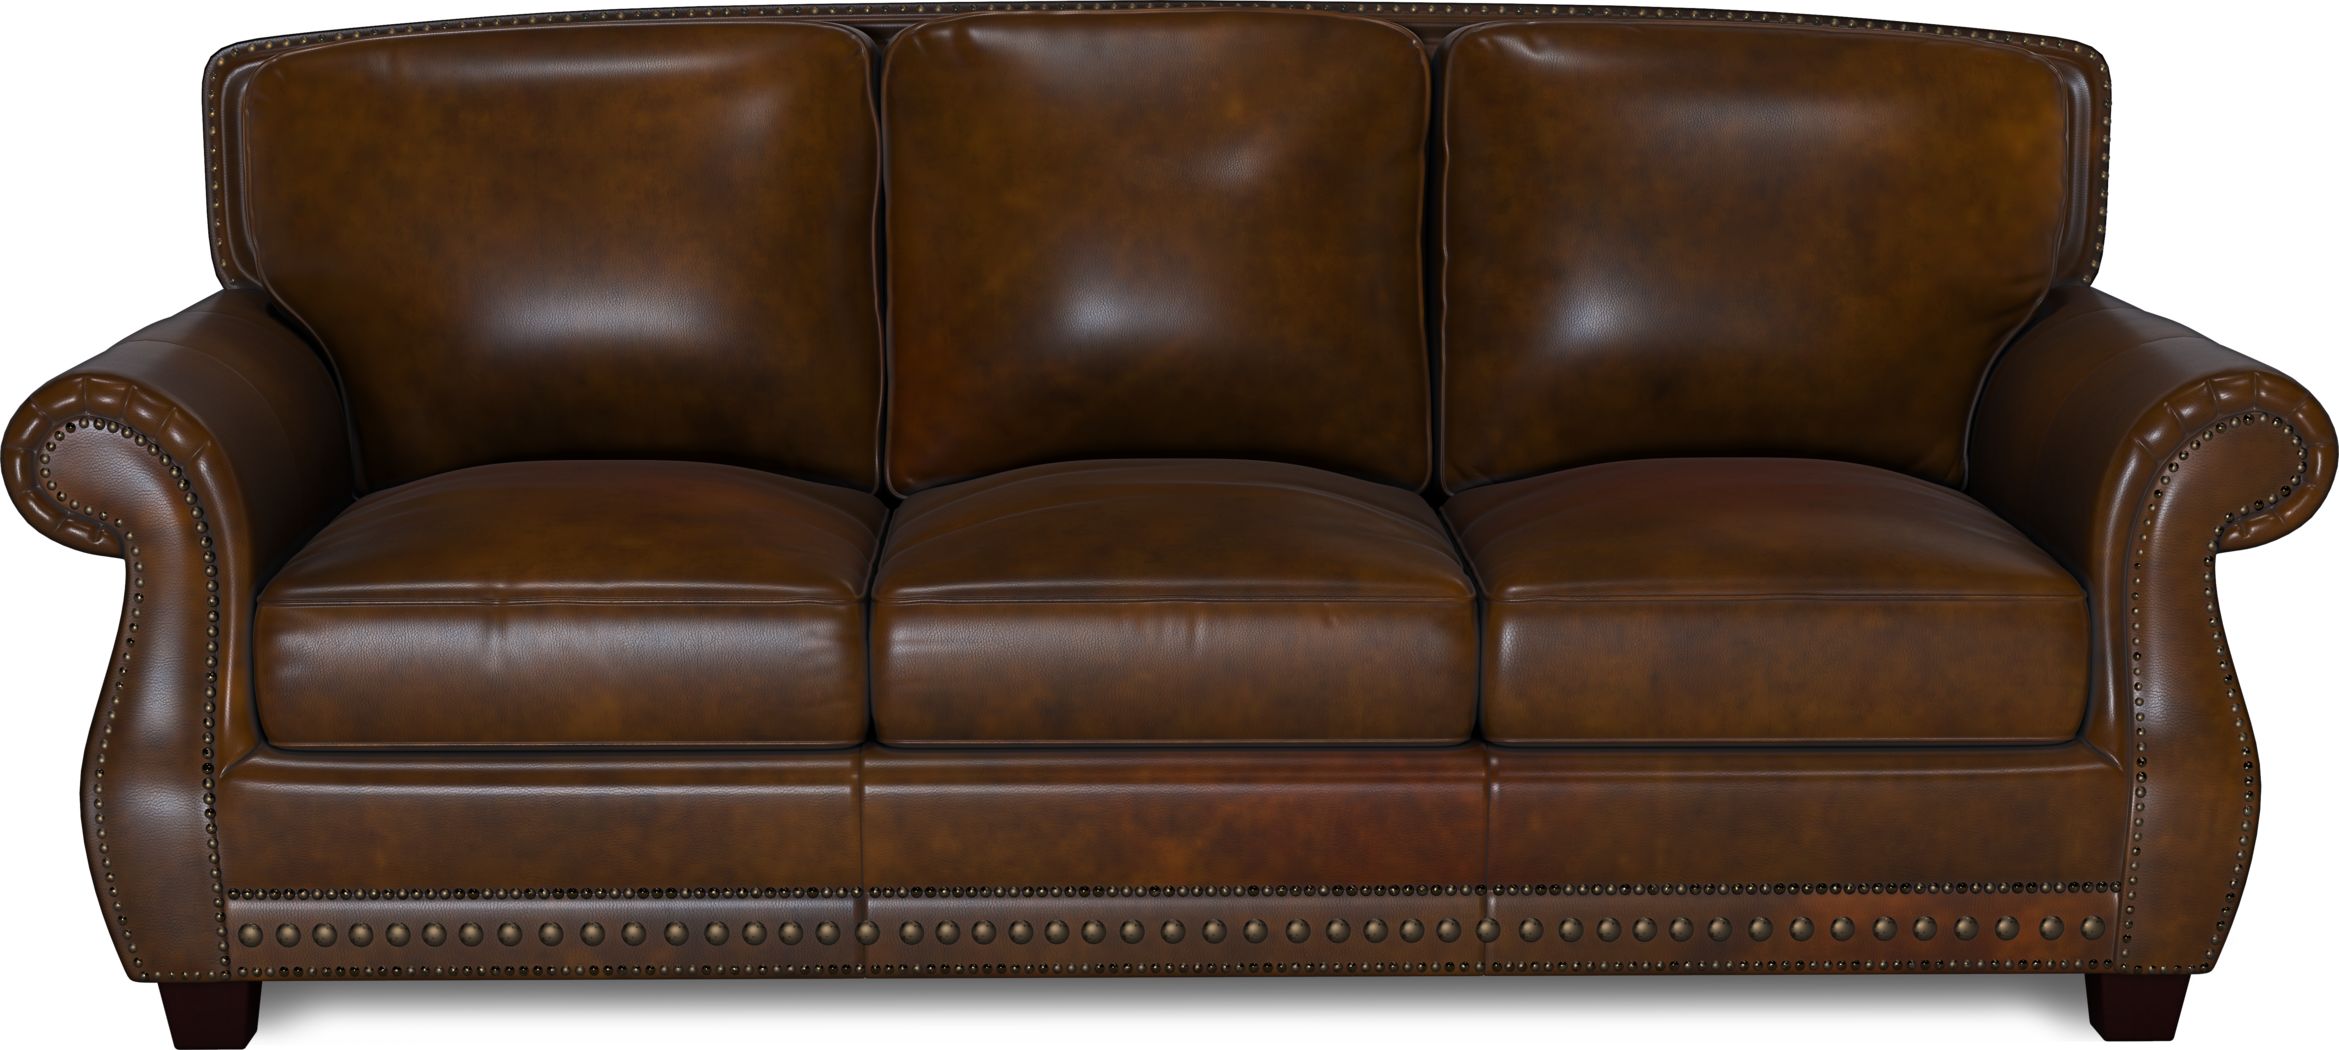 Calvano Brown Leather Sofa Rooms, Cindy Crawford Vita Leather Sofa Reviews